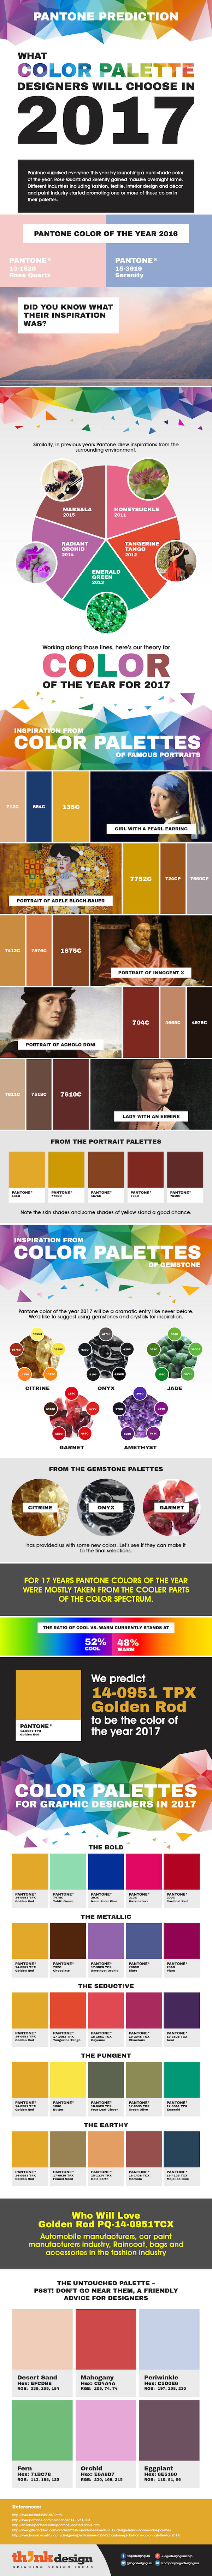 2-Infographic-PANTONE-prediction-color-palettes-designers-choose-in-2017